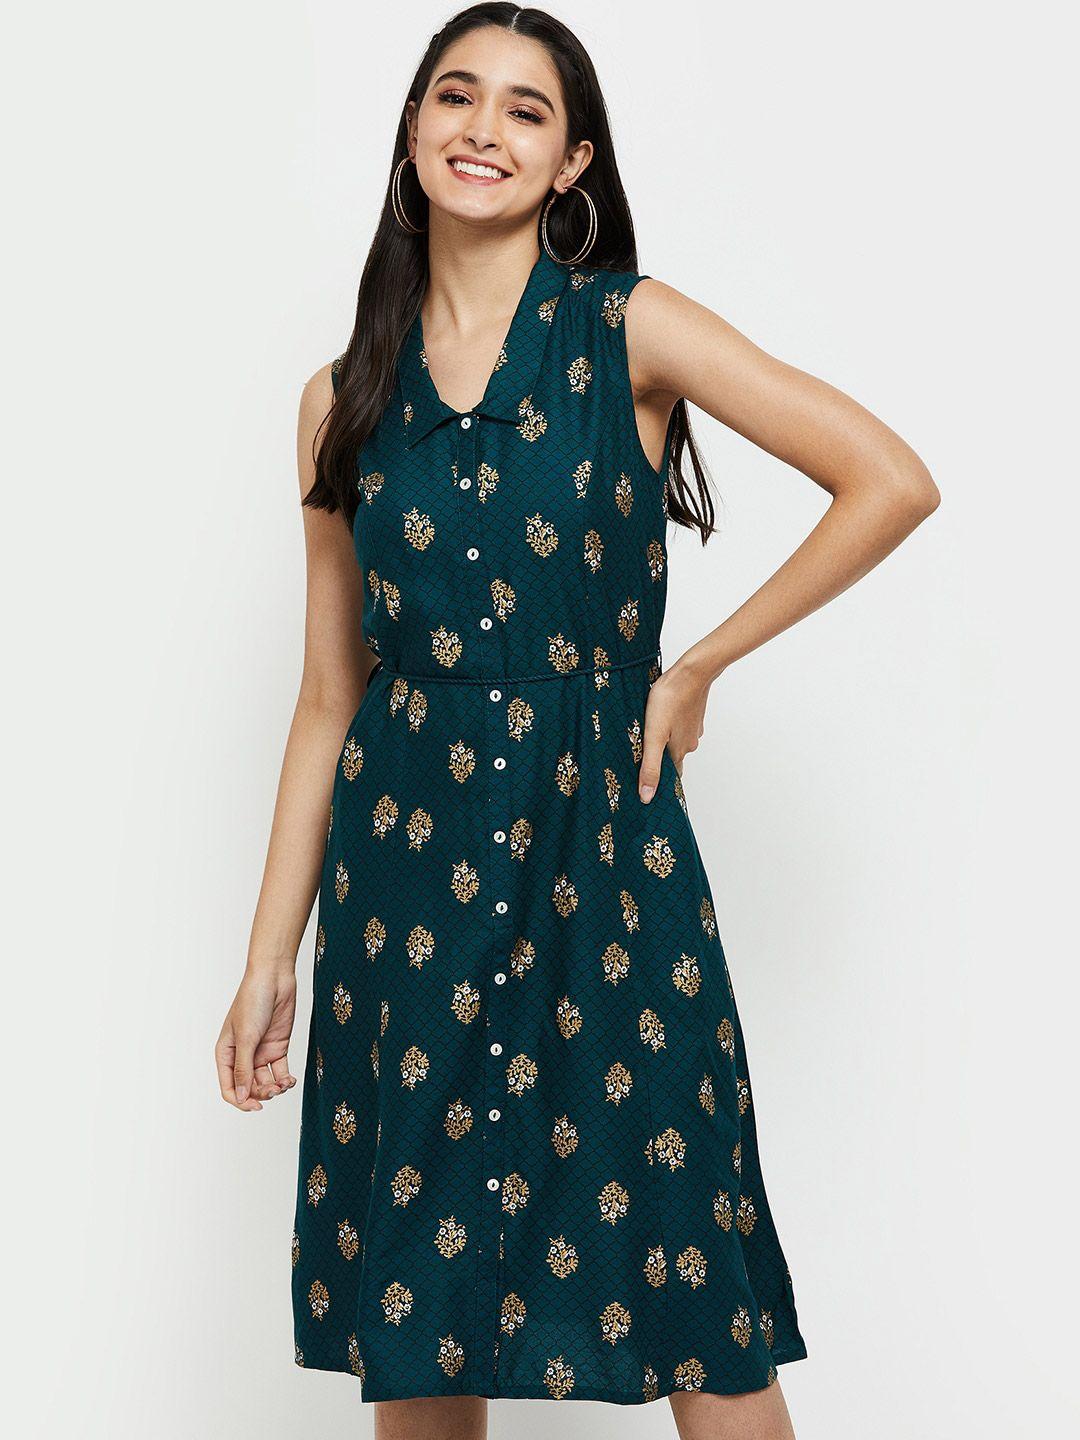 max Teal Green & Golden Ethnic Motifs Ethnic A-Line Dress